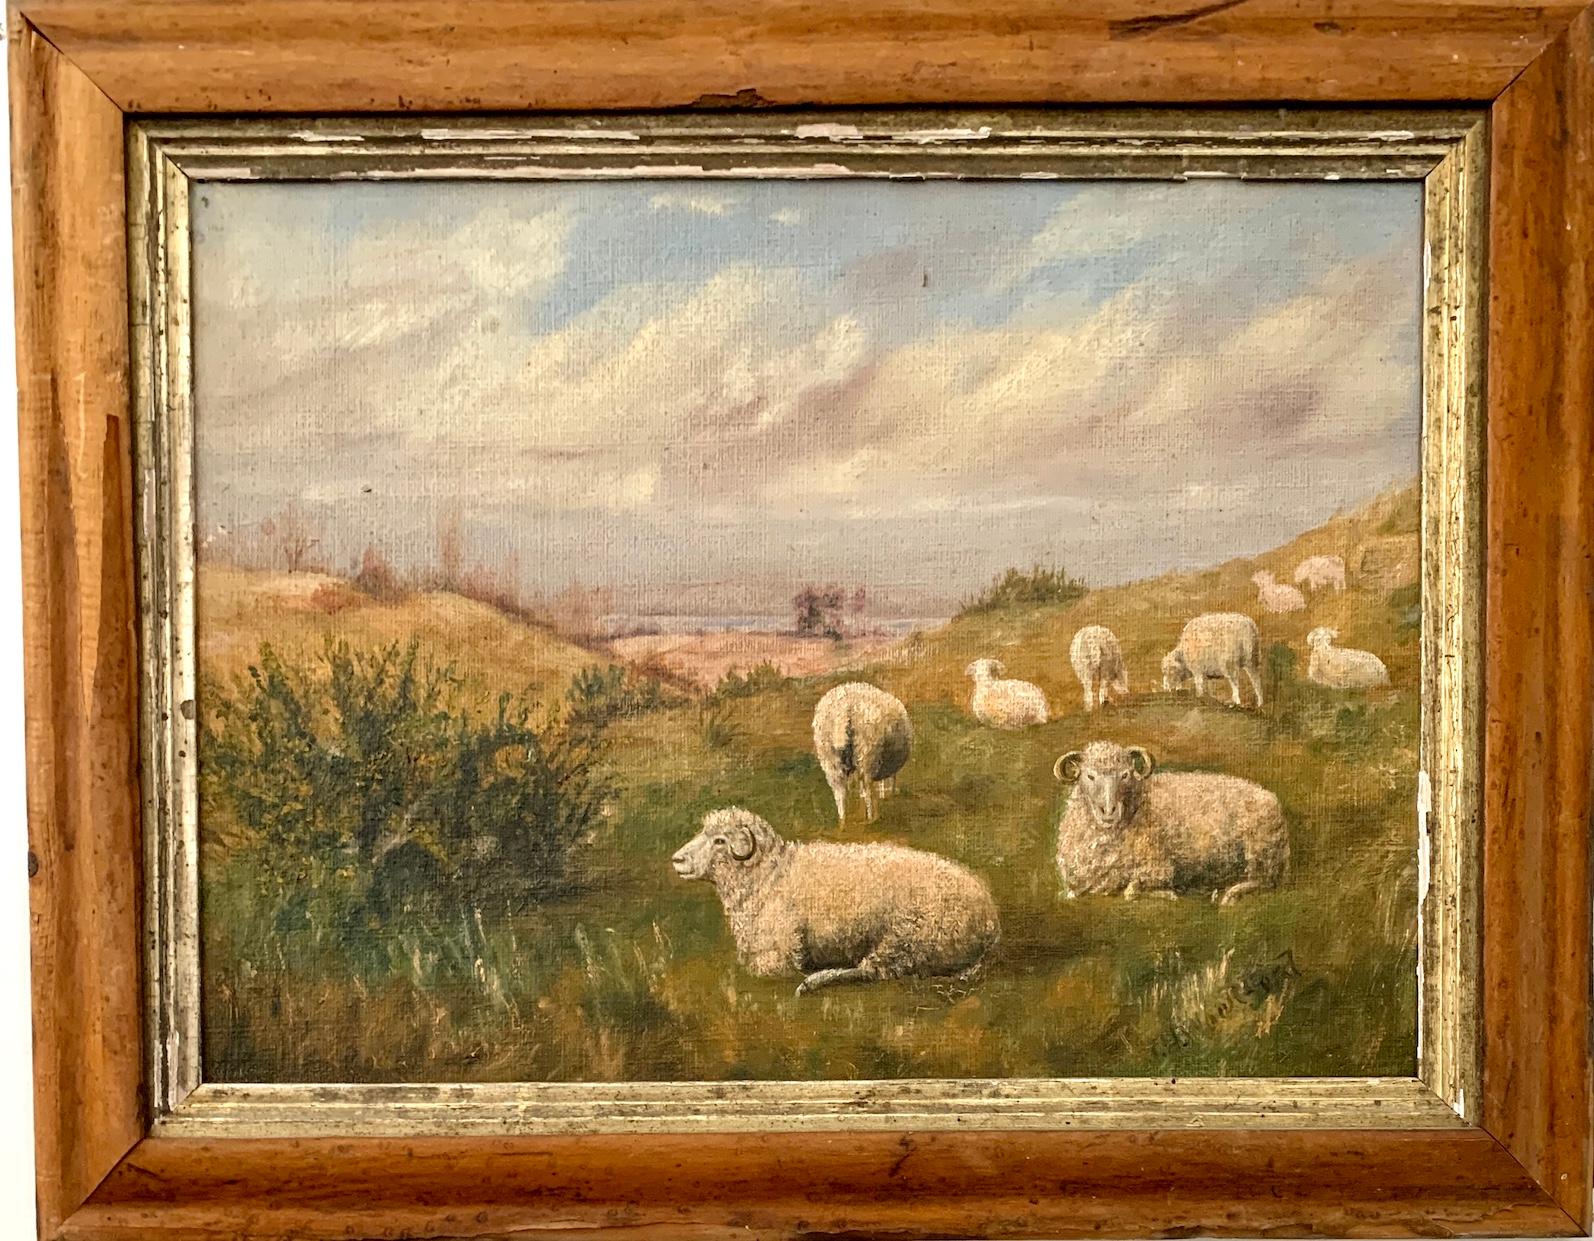 19th century English Folk Art School Landscape Painting - 19th Century English folk art of Sheep in a landscape with maple frame